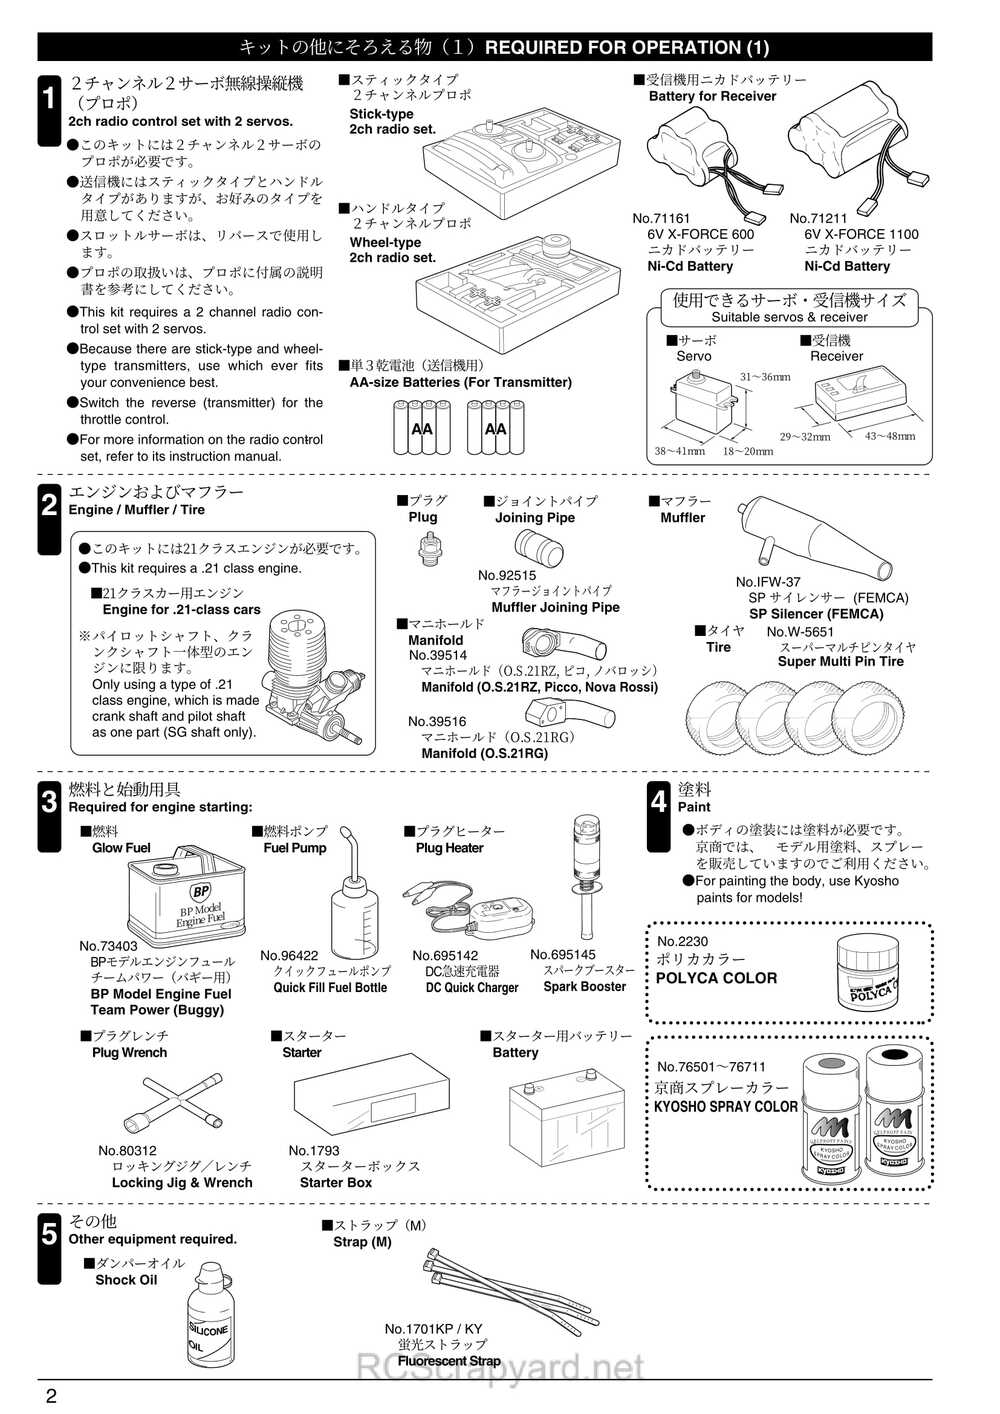 Kyosho - 31273 - Inferno-MP-7-5-Yuichi3 - Manual - Page 02